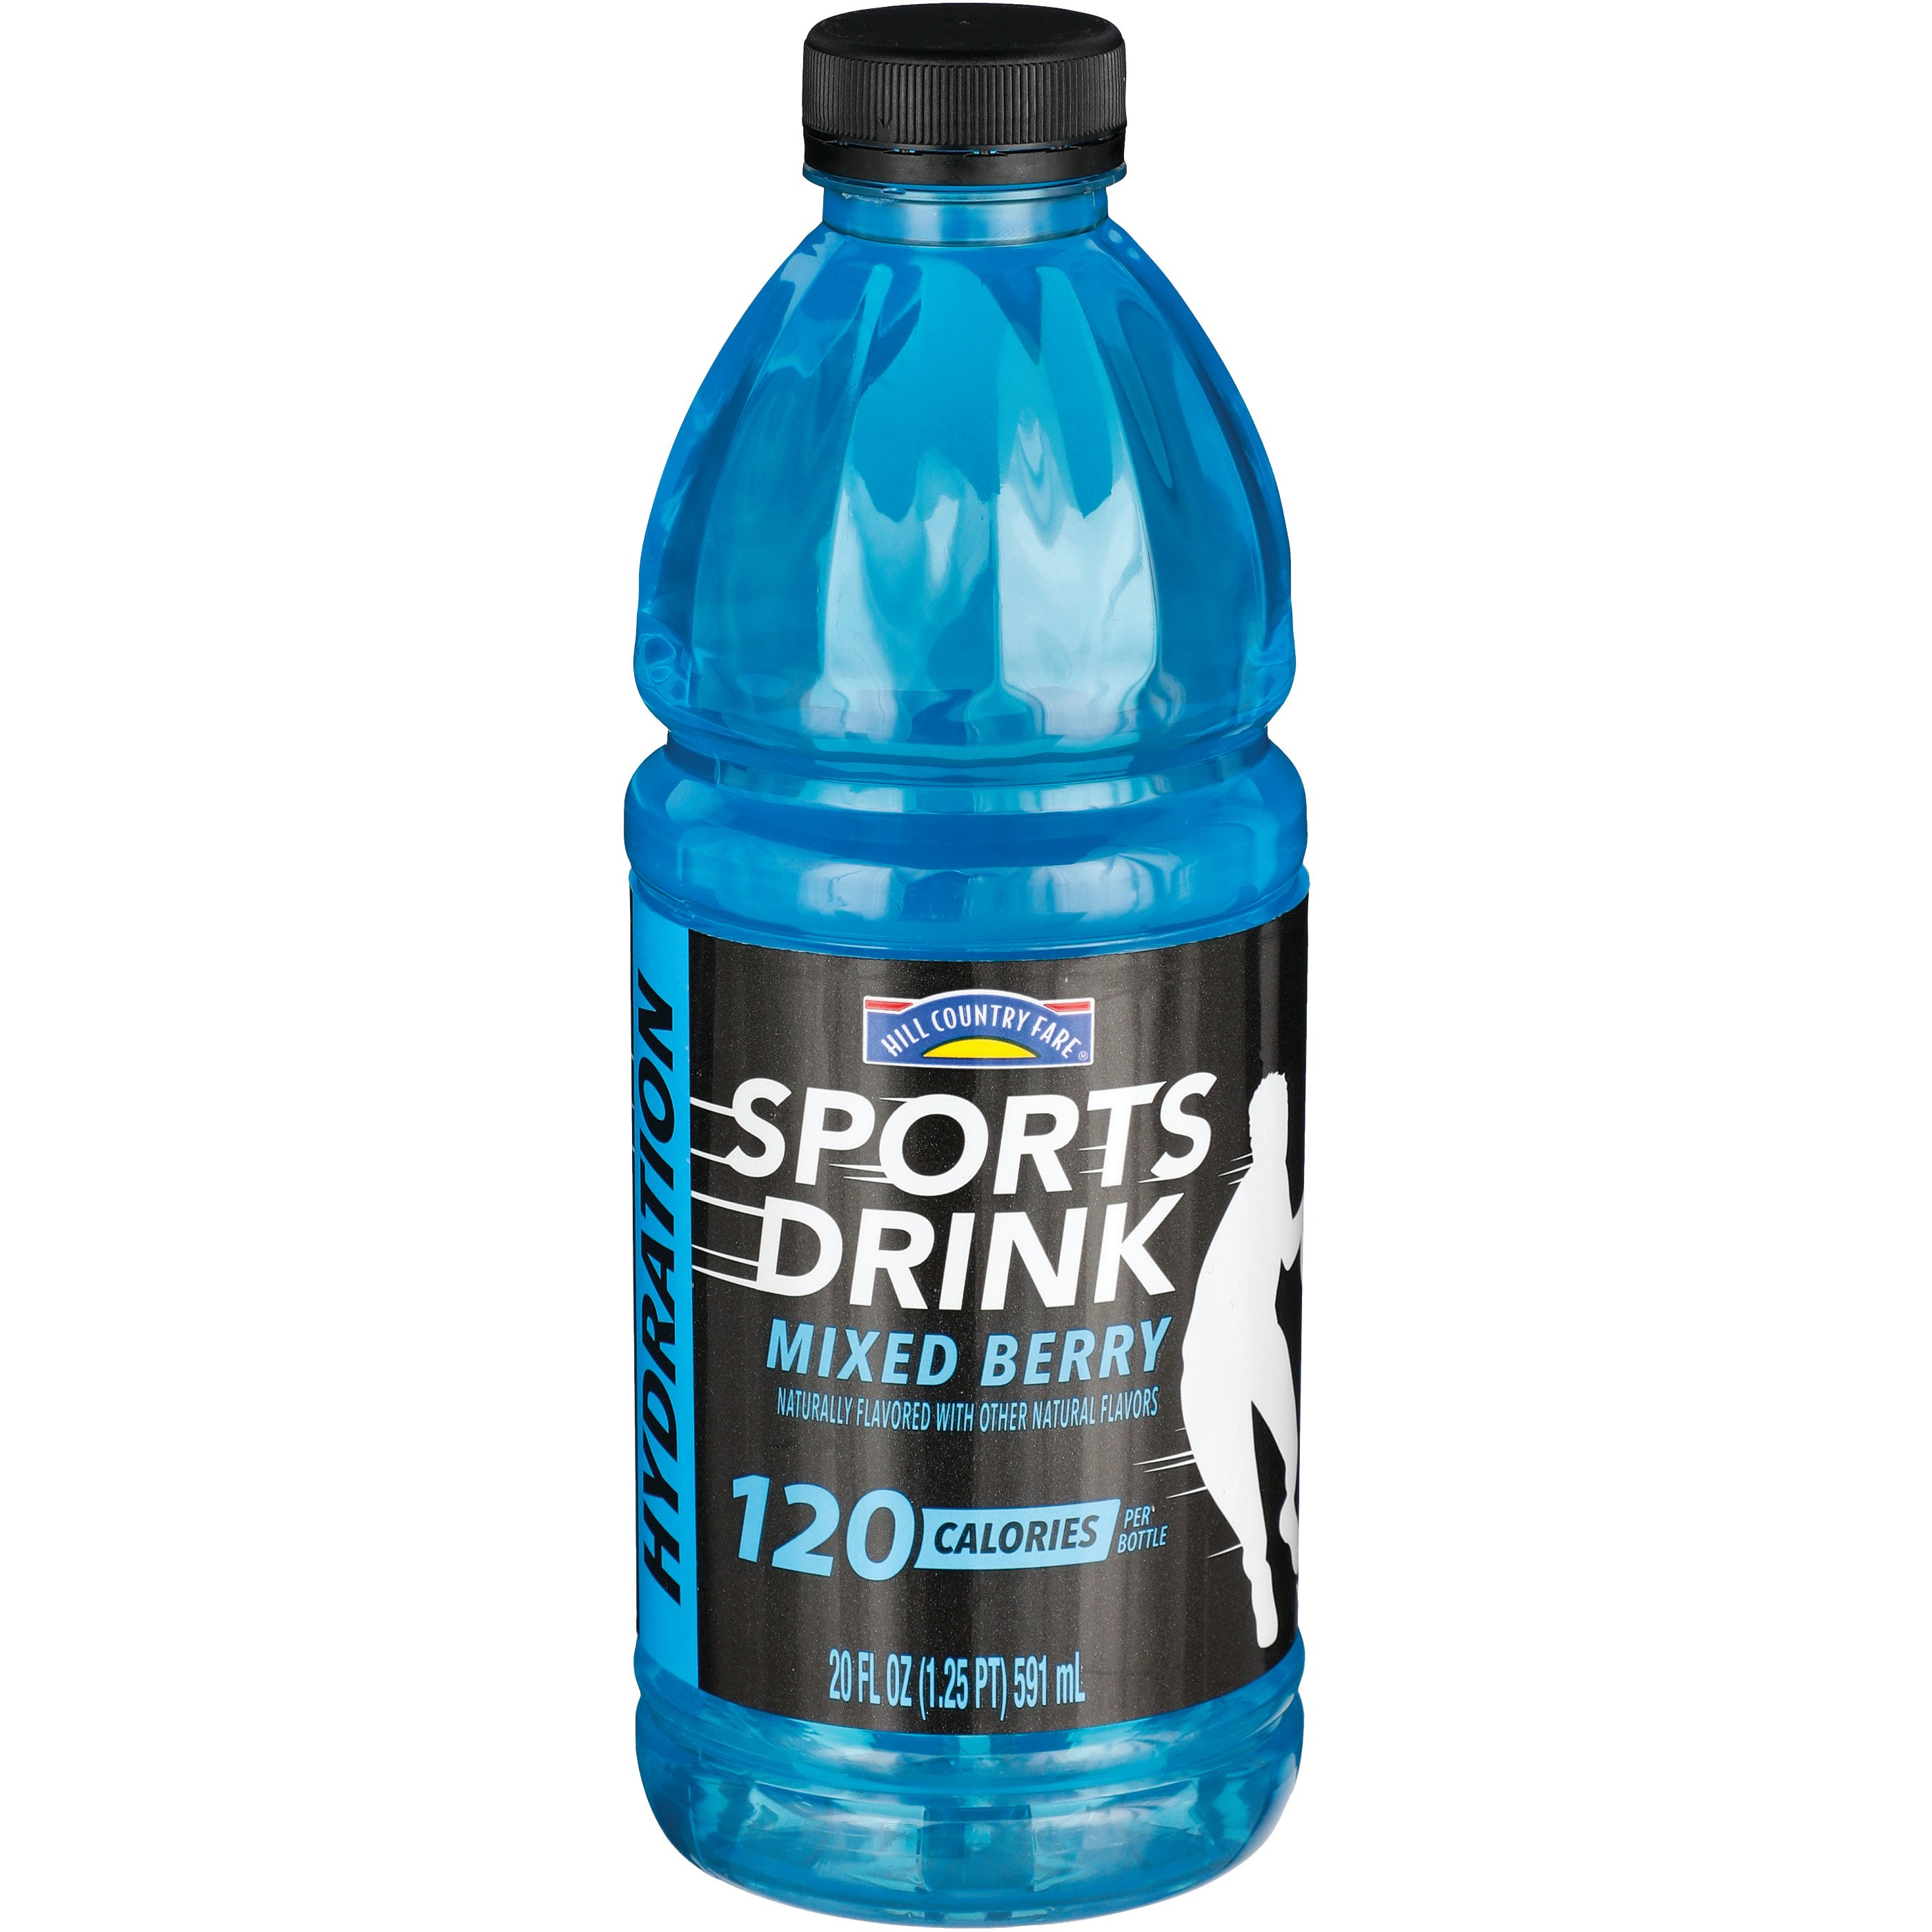 Energy Sports Drink